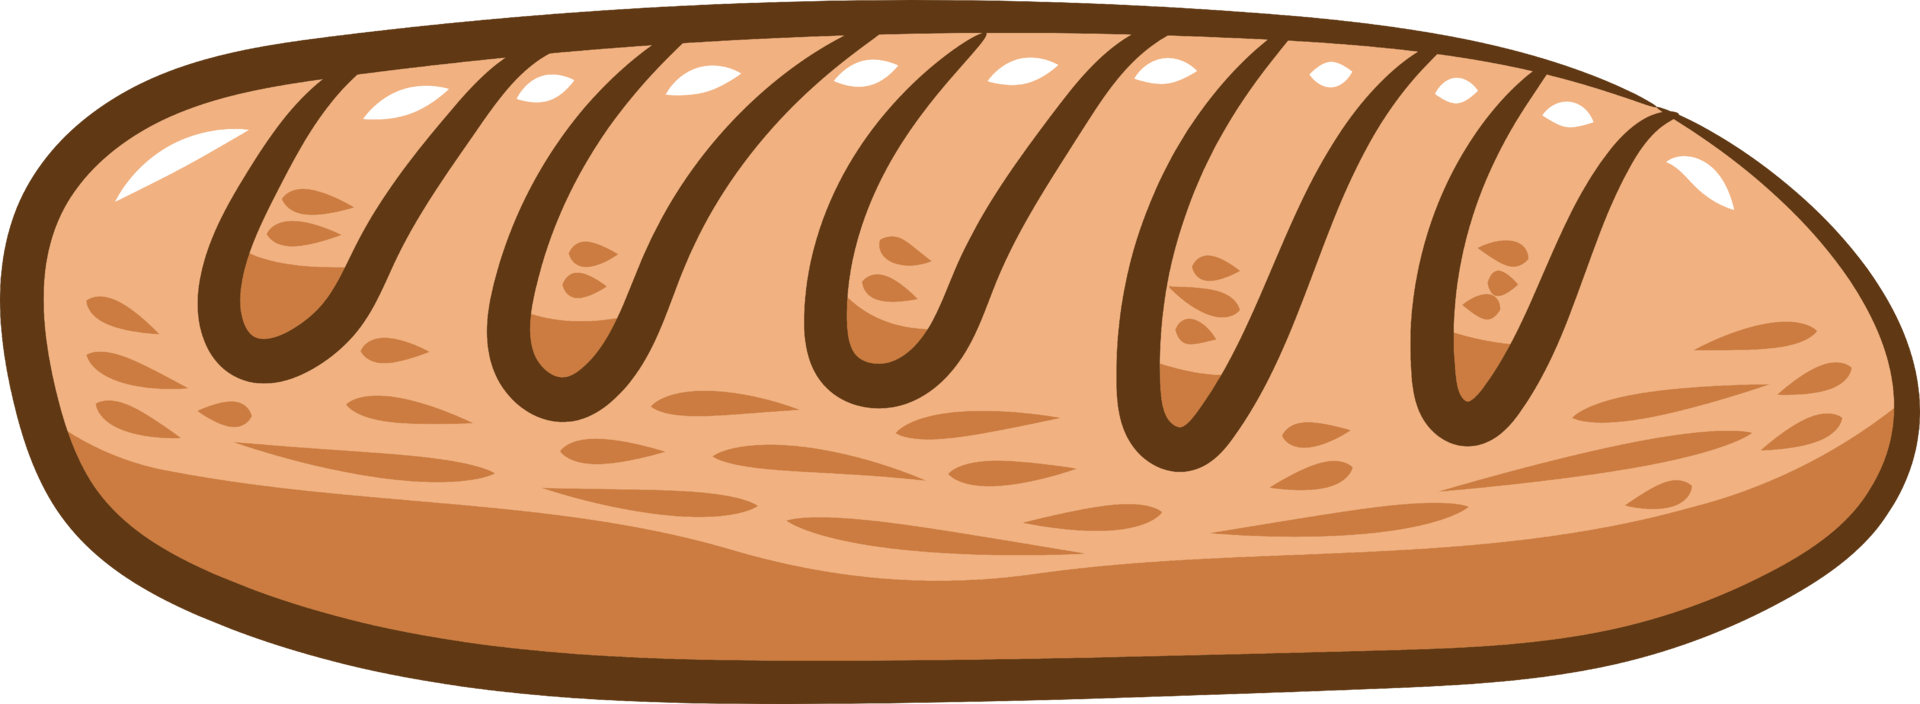 brood PNG grafisch clip art ontwerp